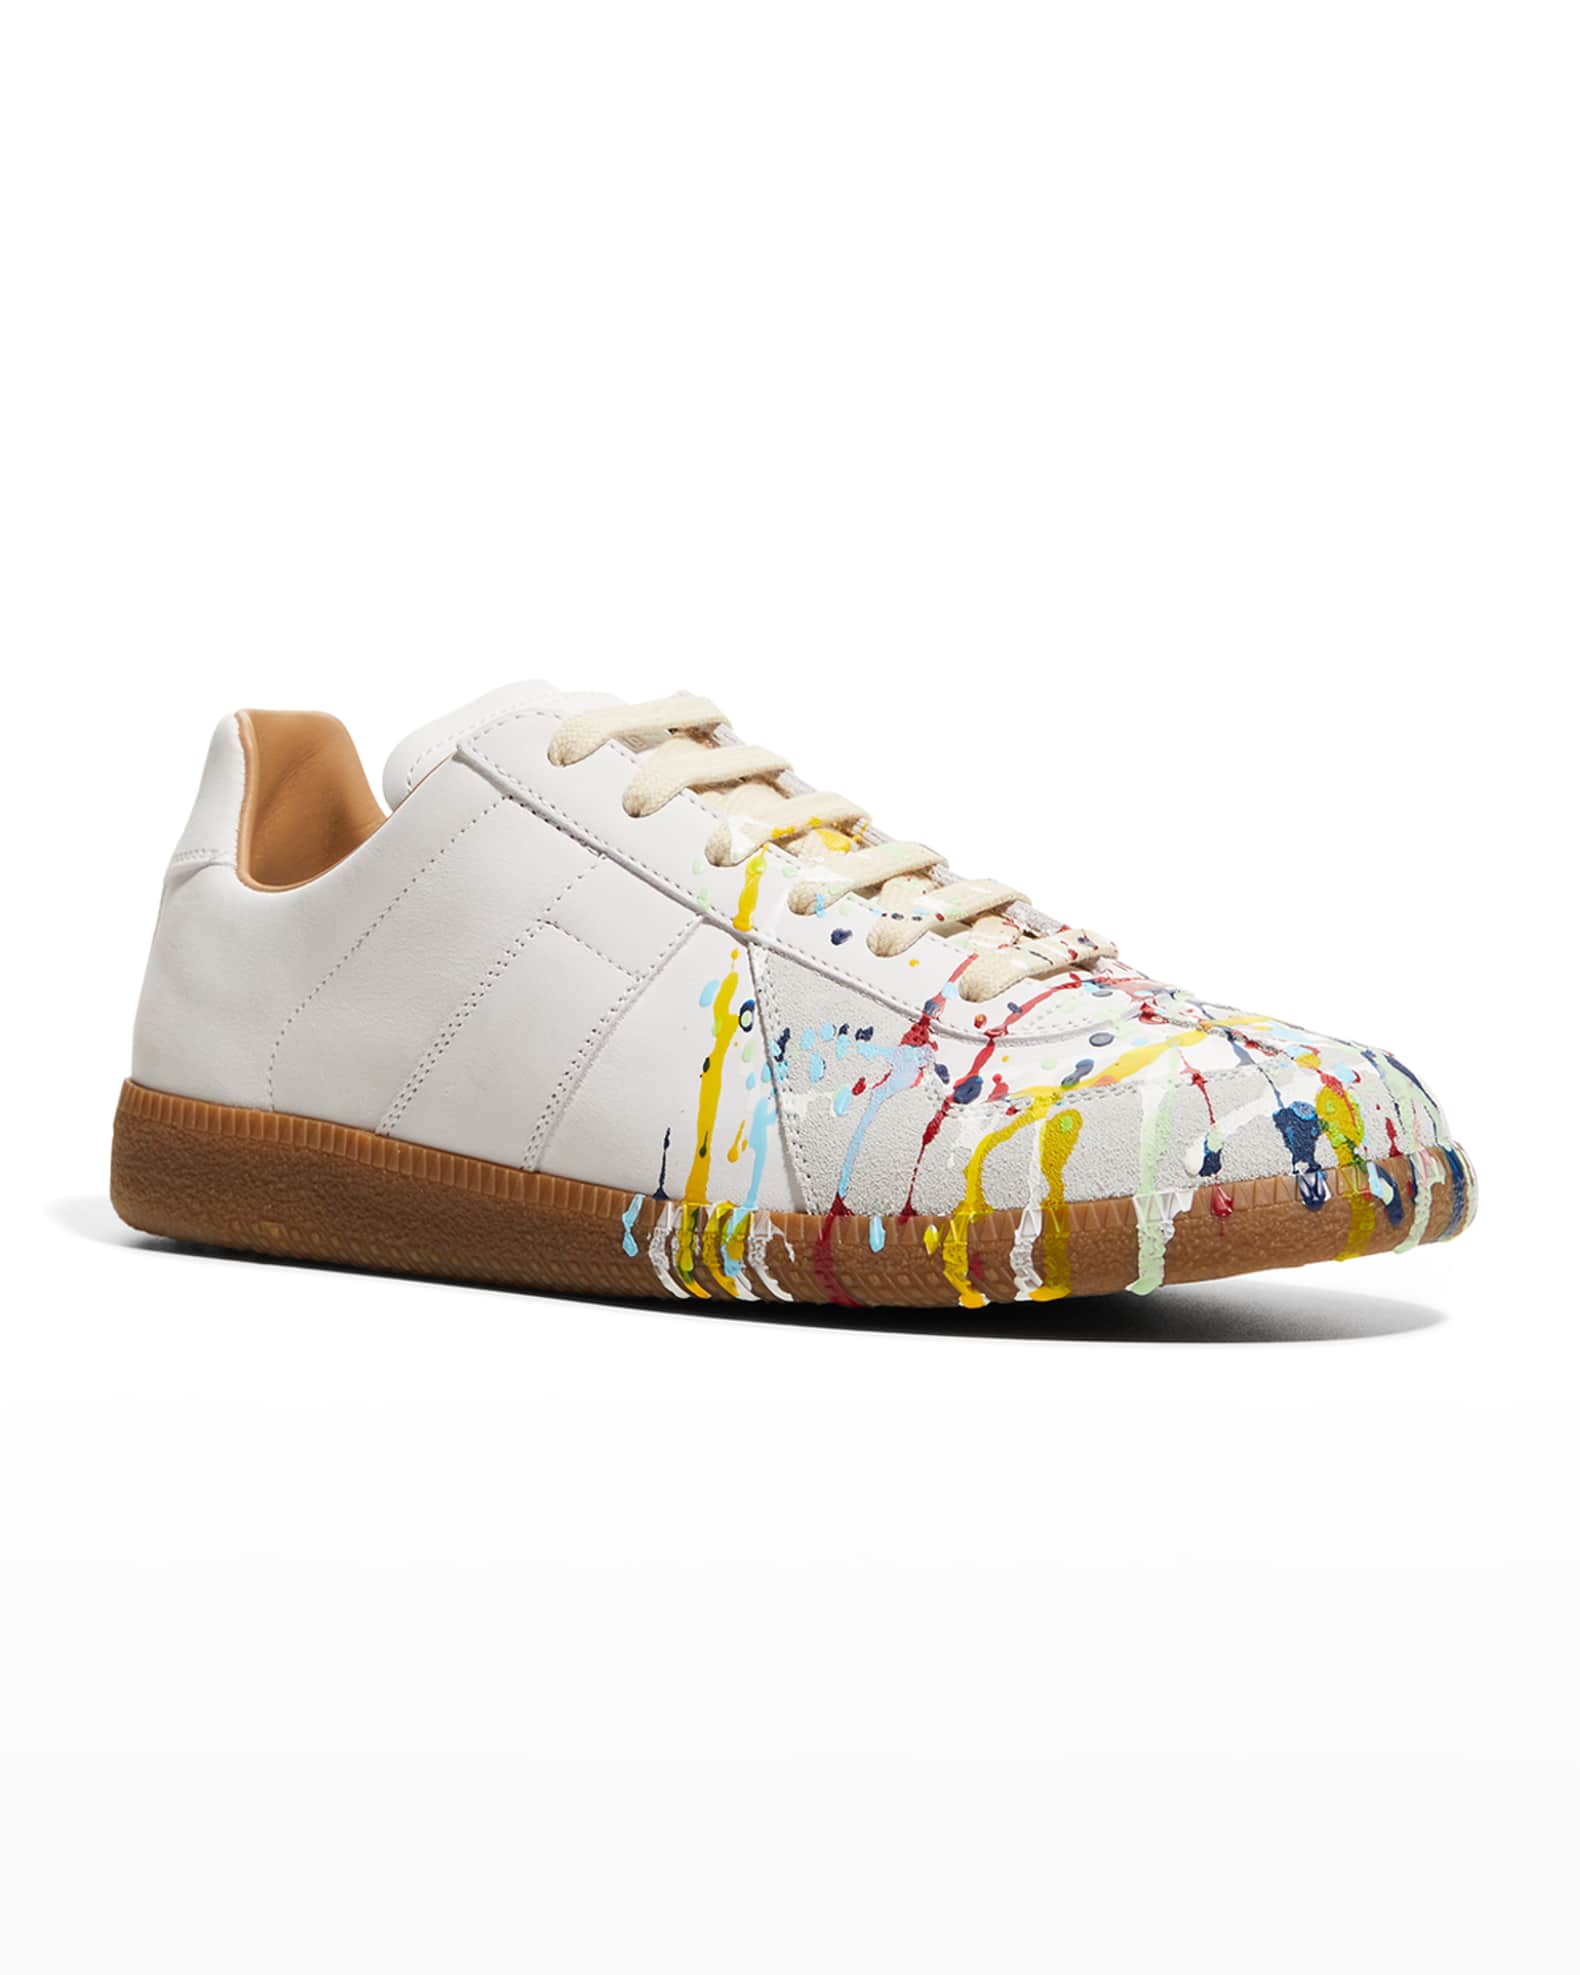 Maison Margiela Replica Paint-Splatter Sneakers | Neiman Marcus